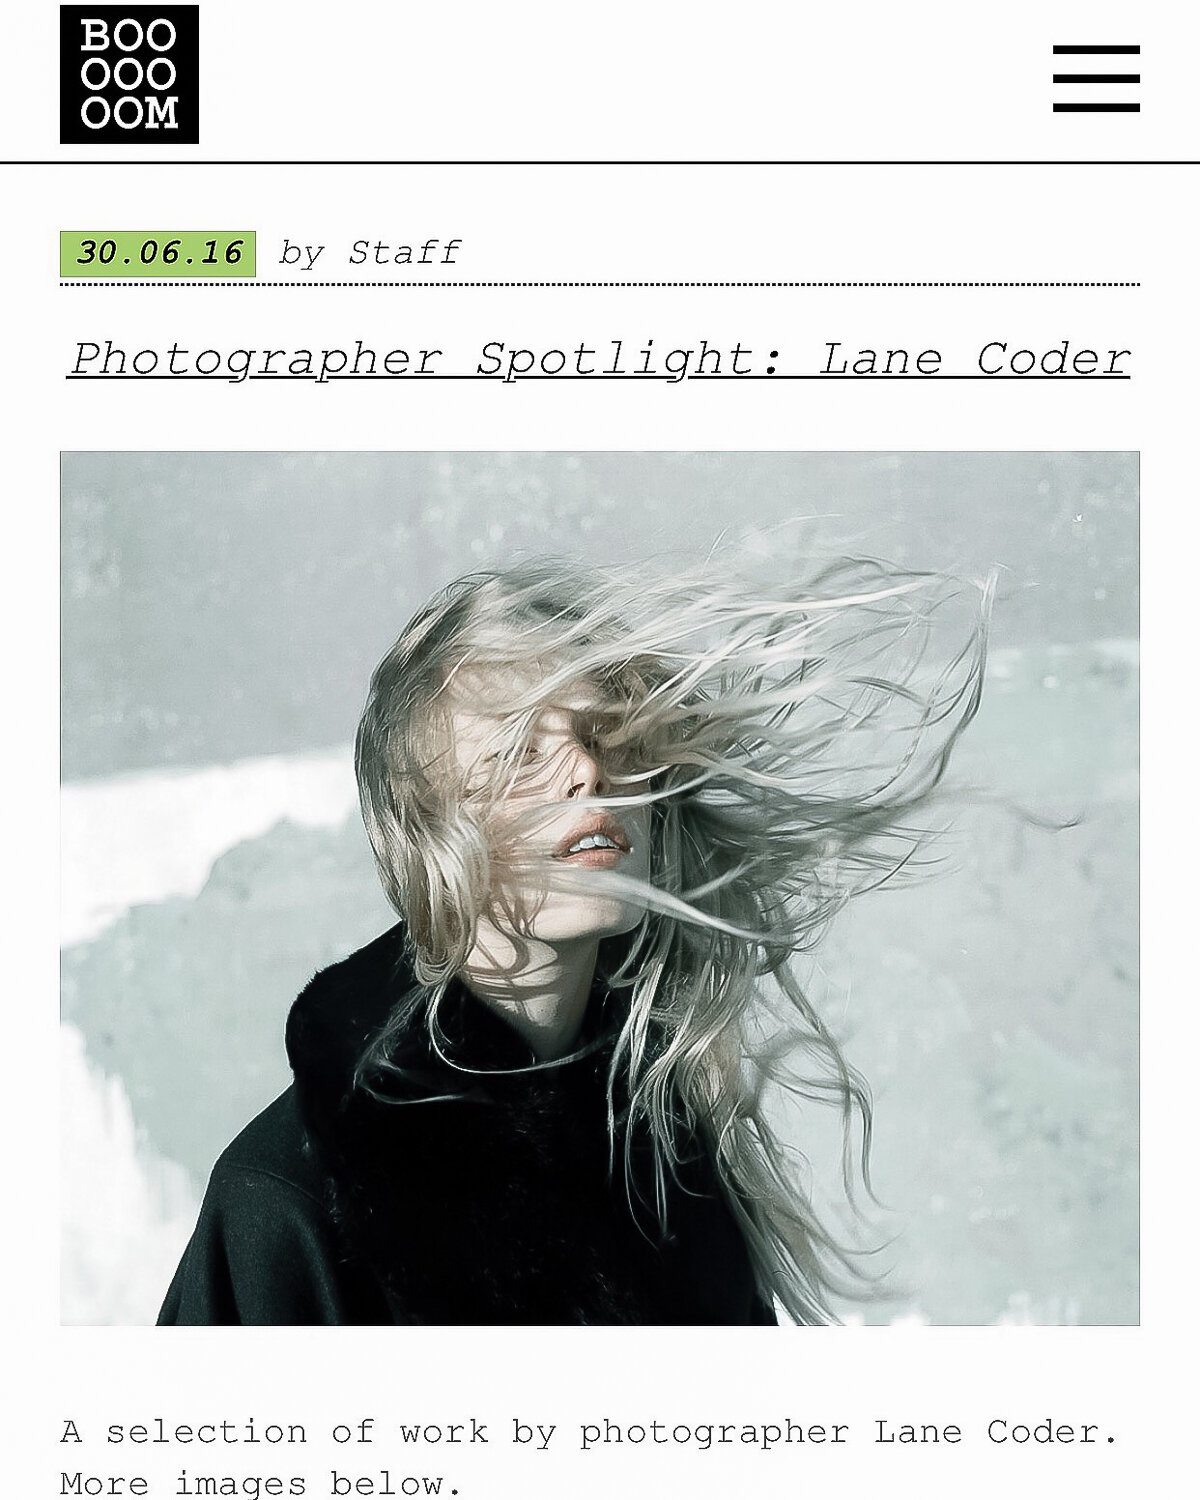 BOOOOOOOM - "Photographer Spotlight"